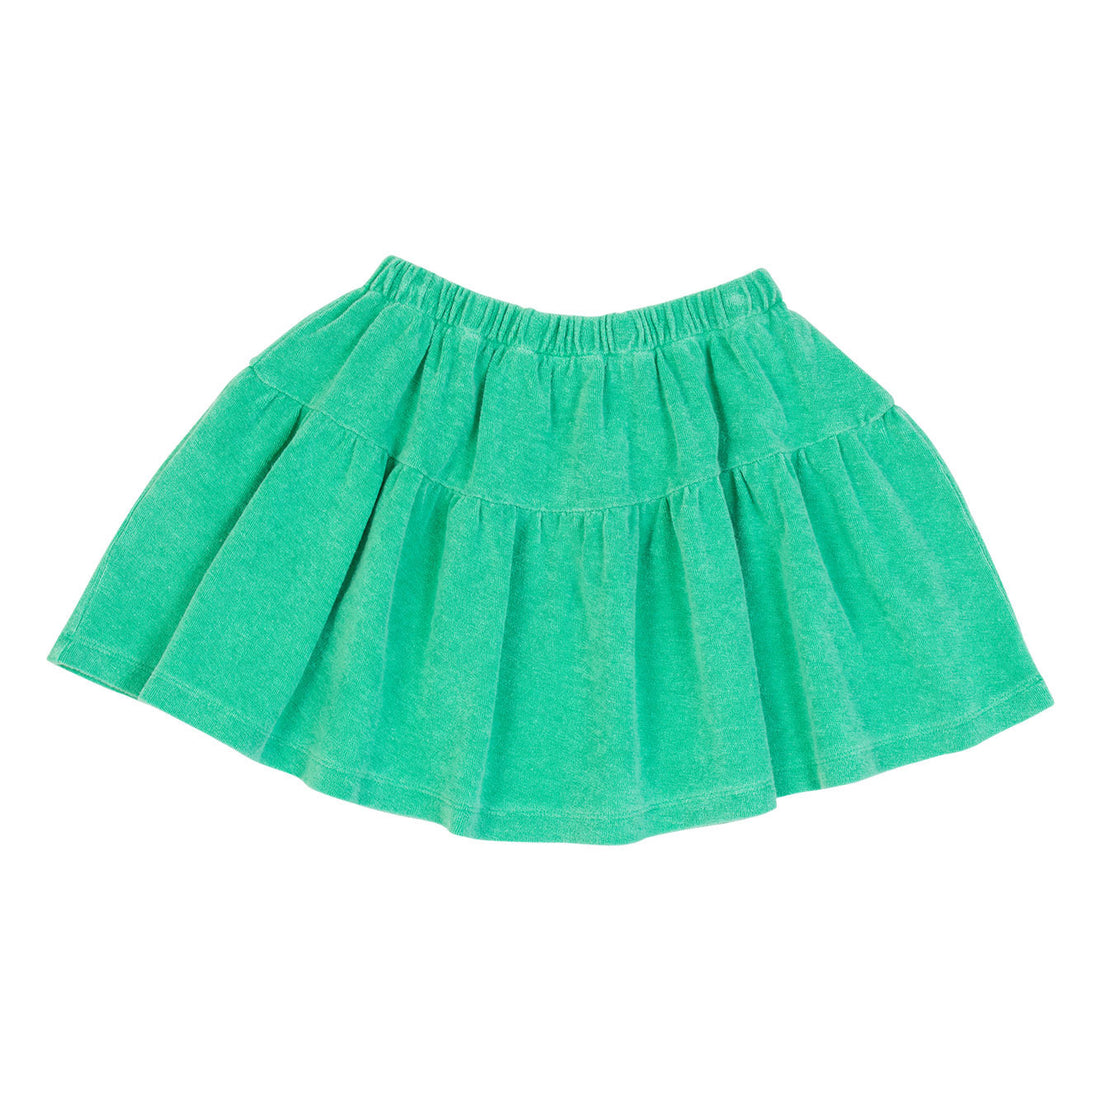 Wynken Sail Green Tacco Layer Skirt